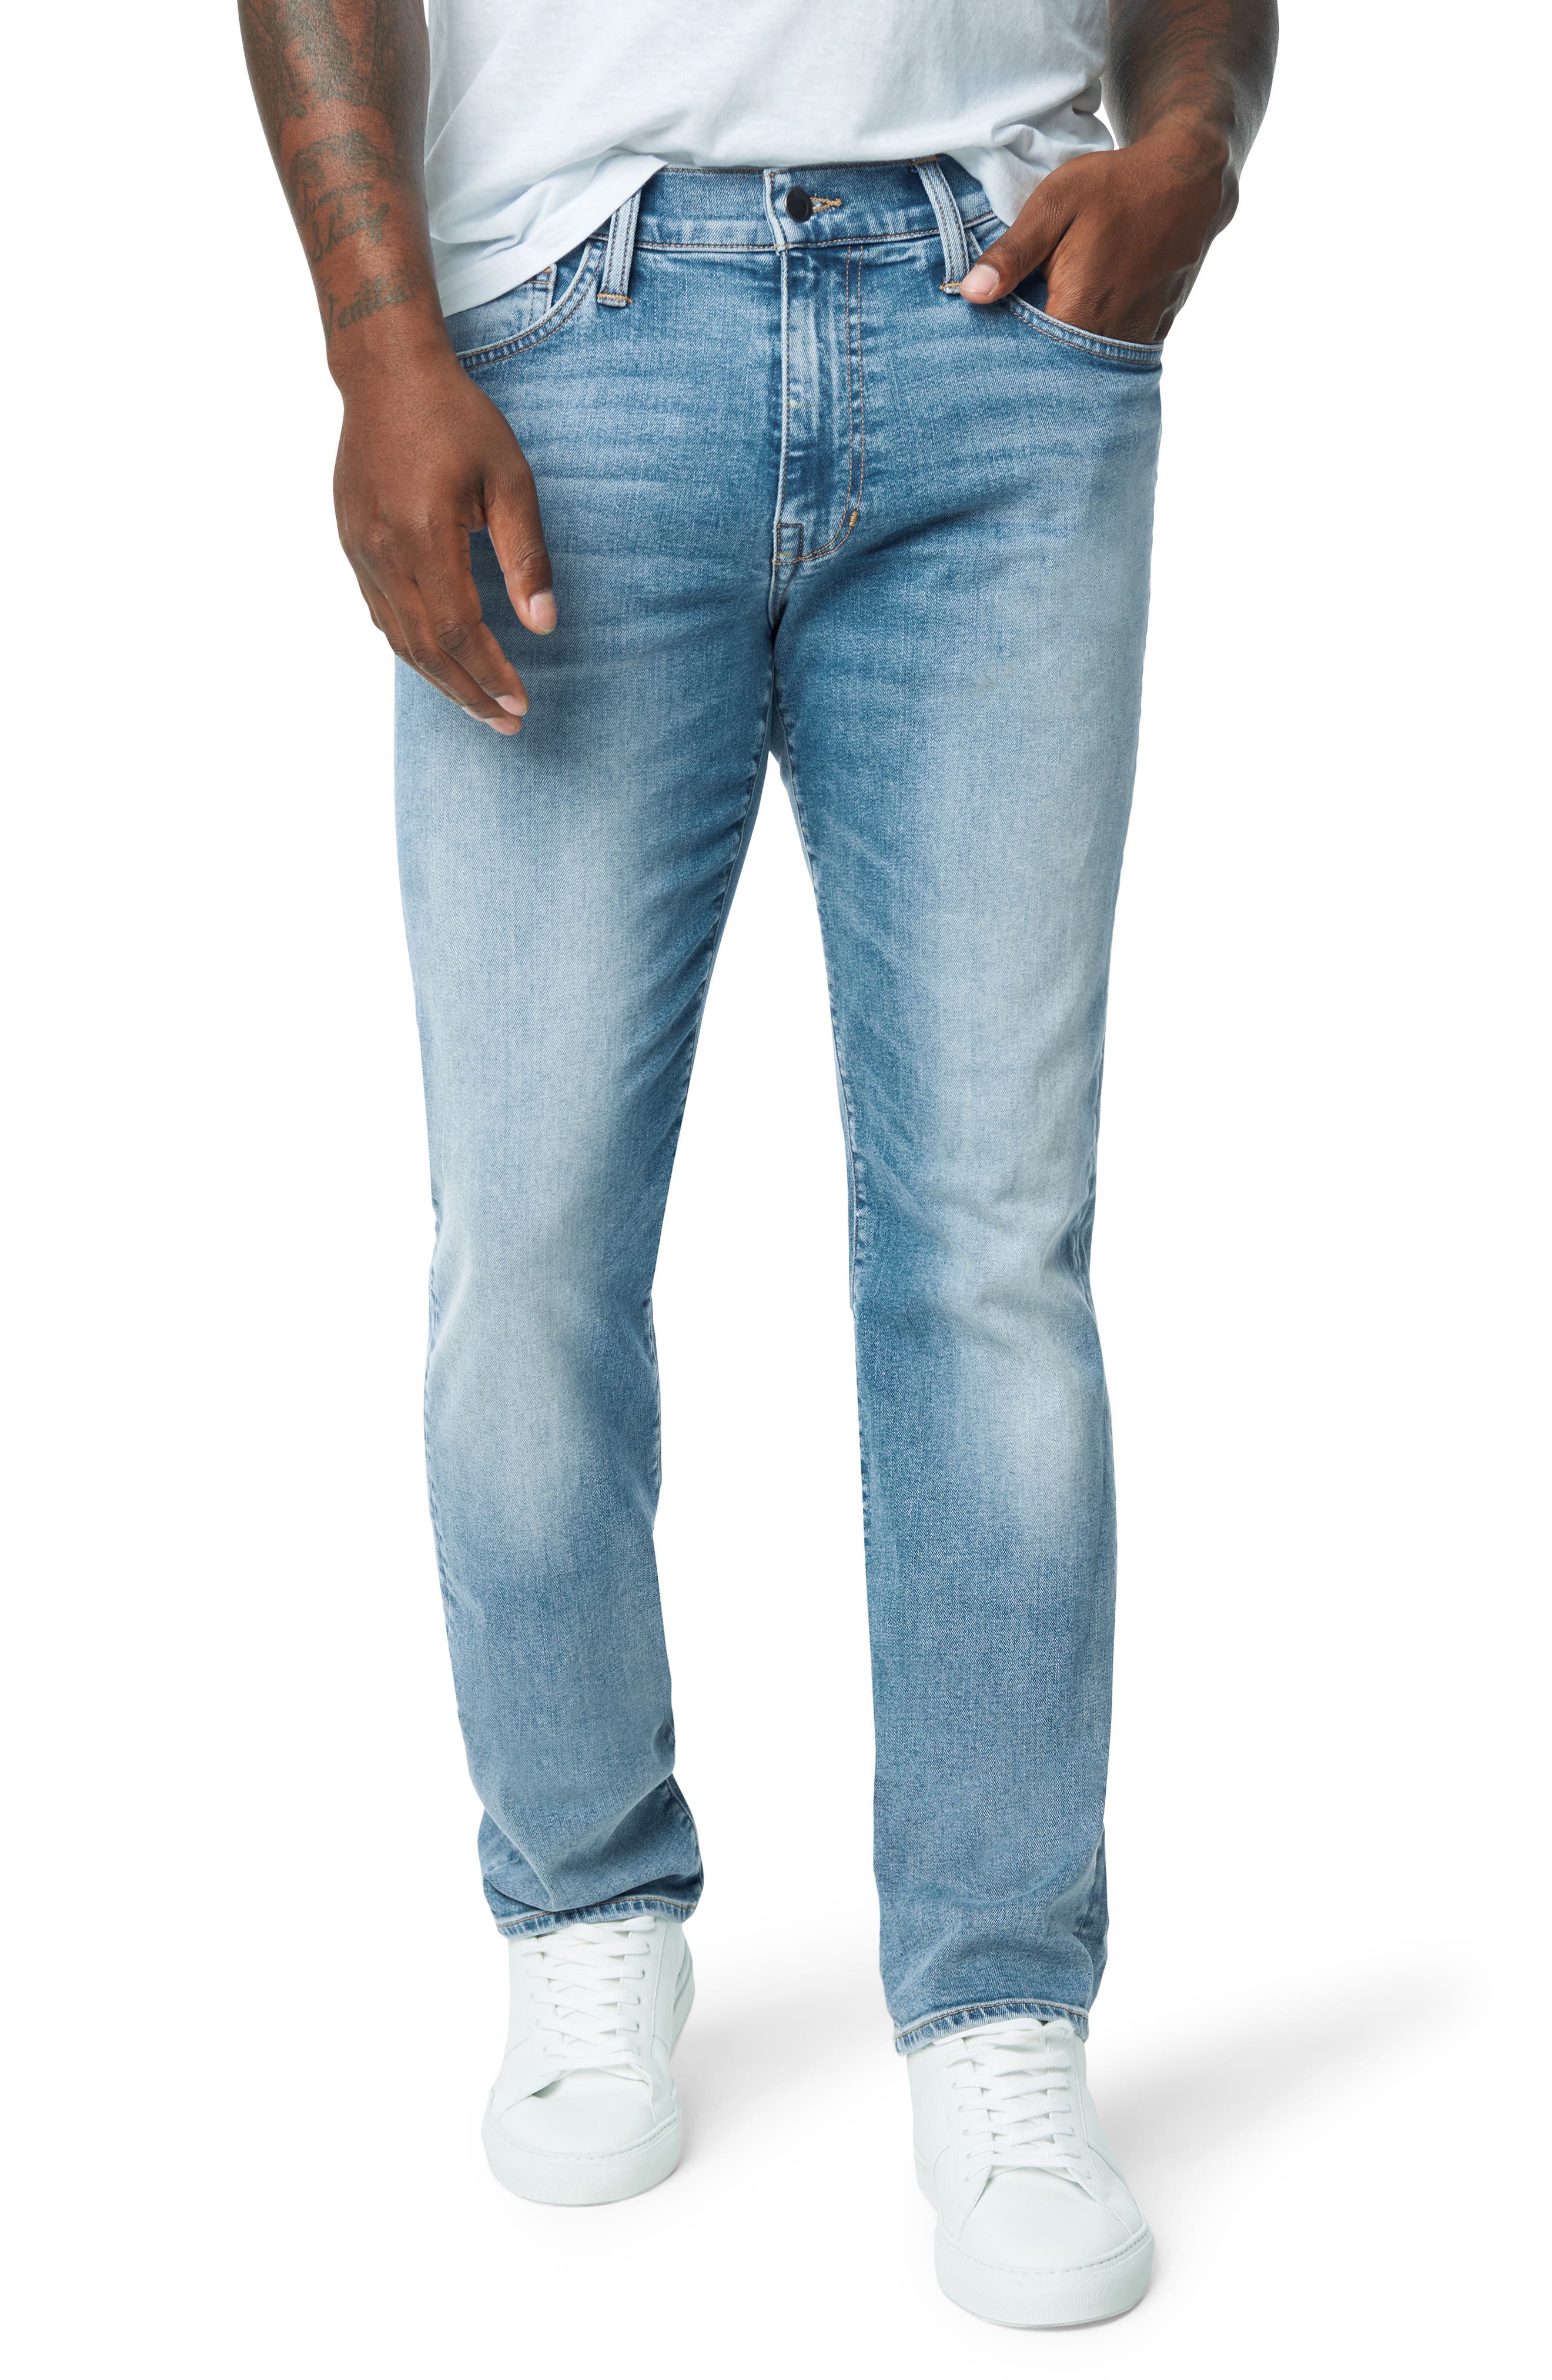 nordstrom joe's jeans men's